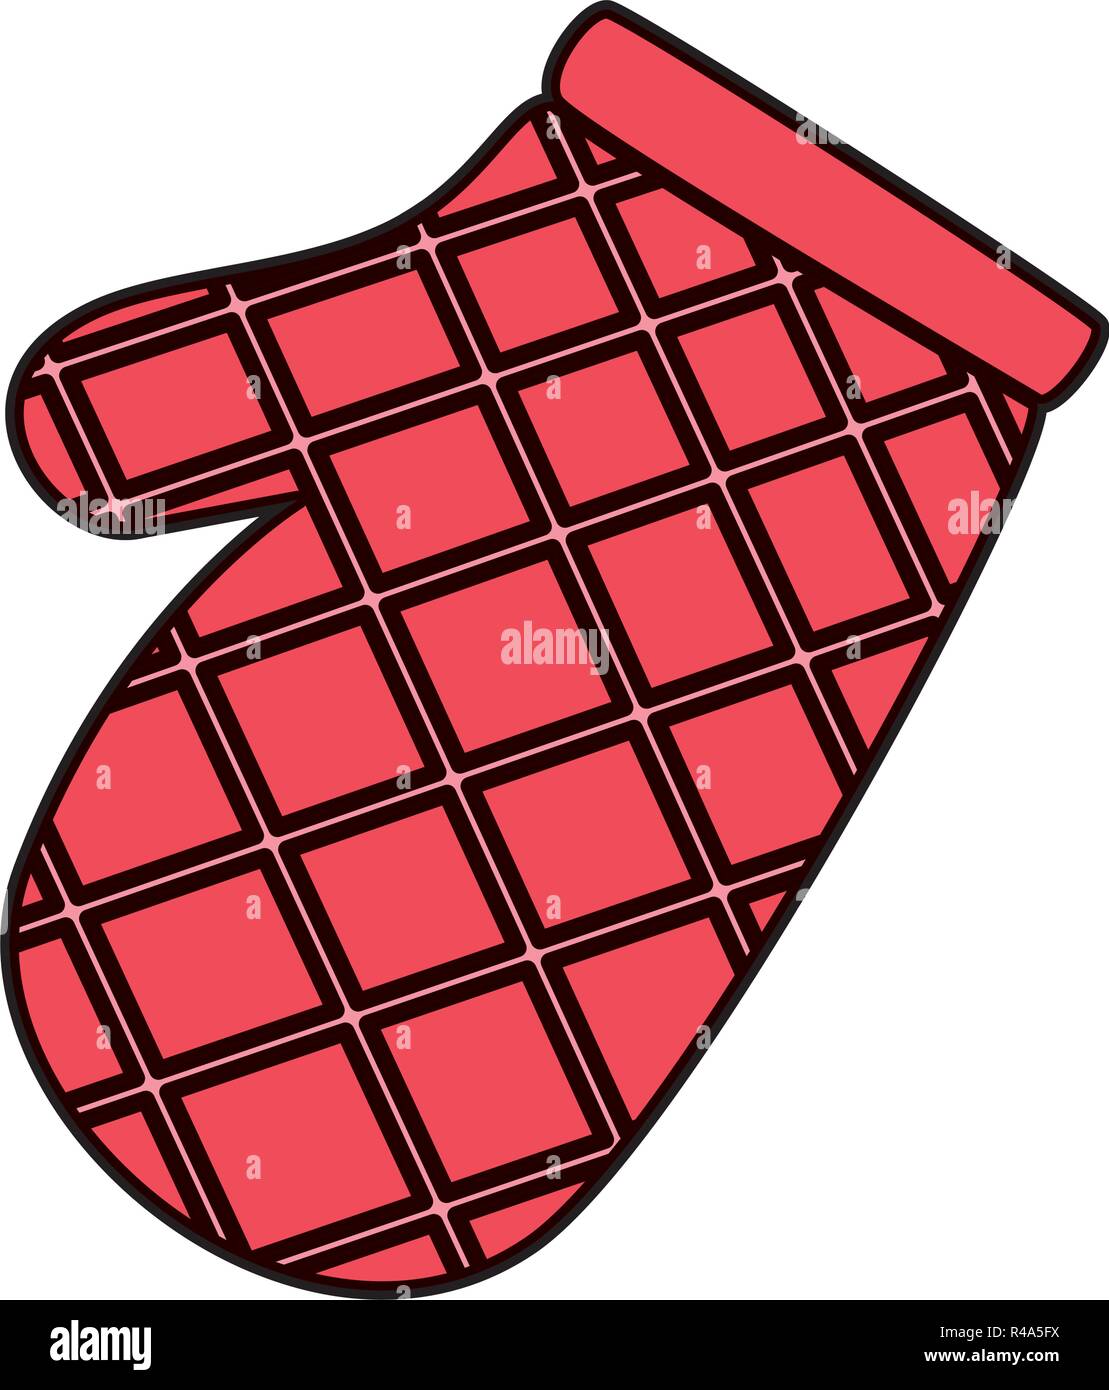 https://c8.alamy.com/comp/R4A5FX/kitchen-glove-isolated-icon-vector-illustration-design-R4A5FX.jpg